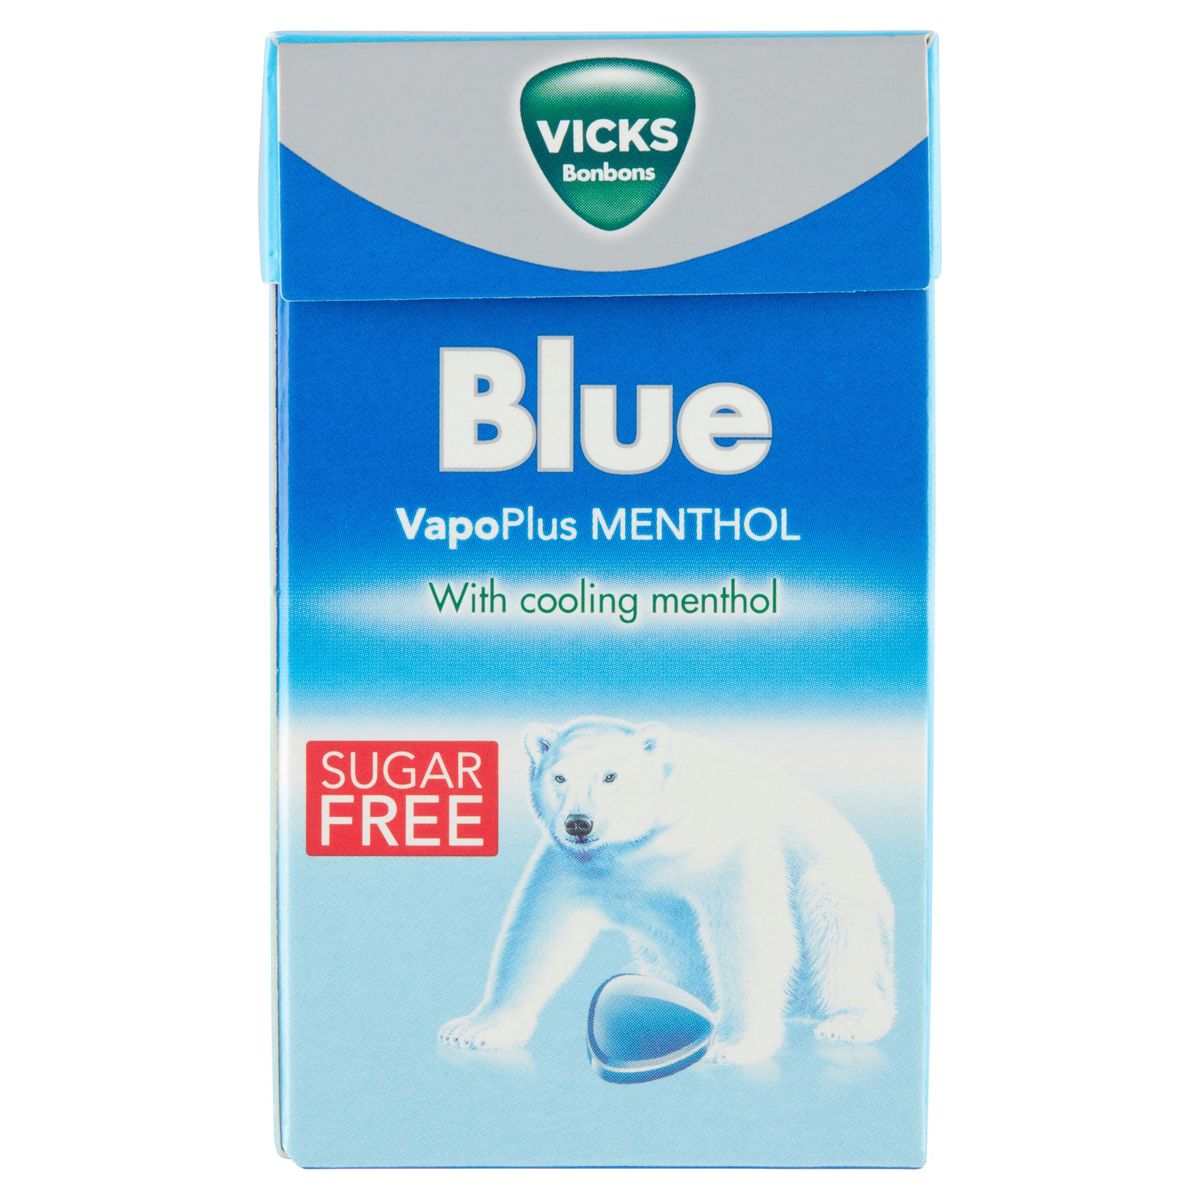 Vicks Bonbons Blue VapoPlus Menthol Sugar Free 40 g